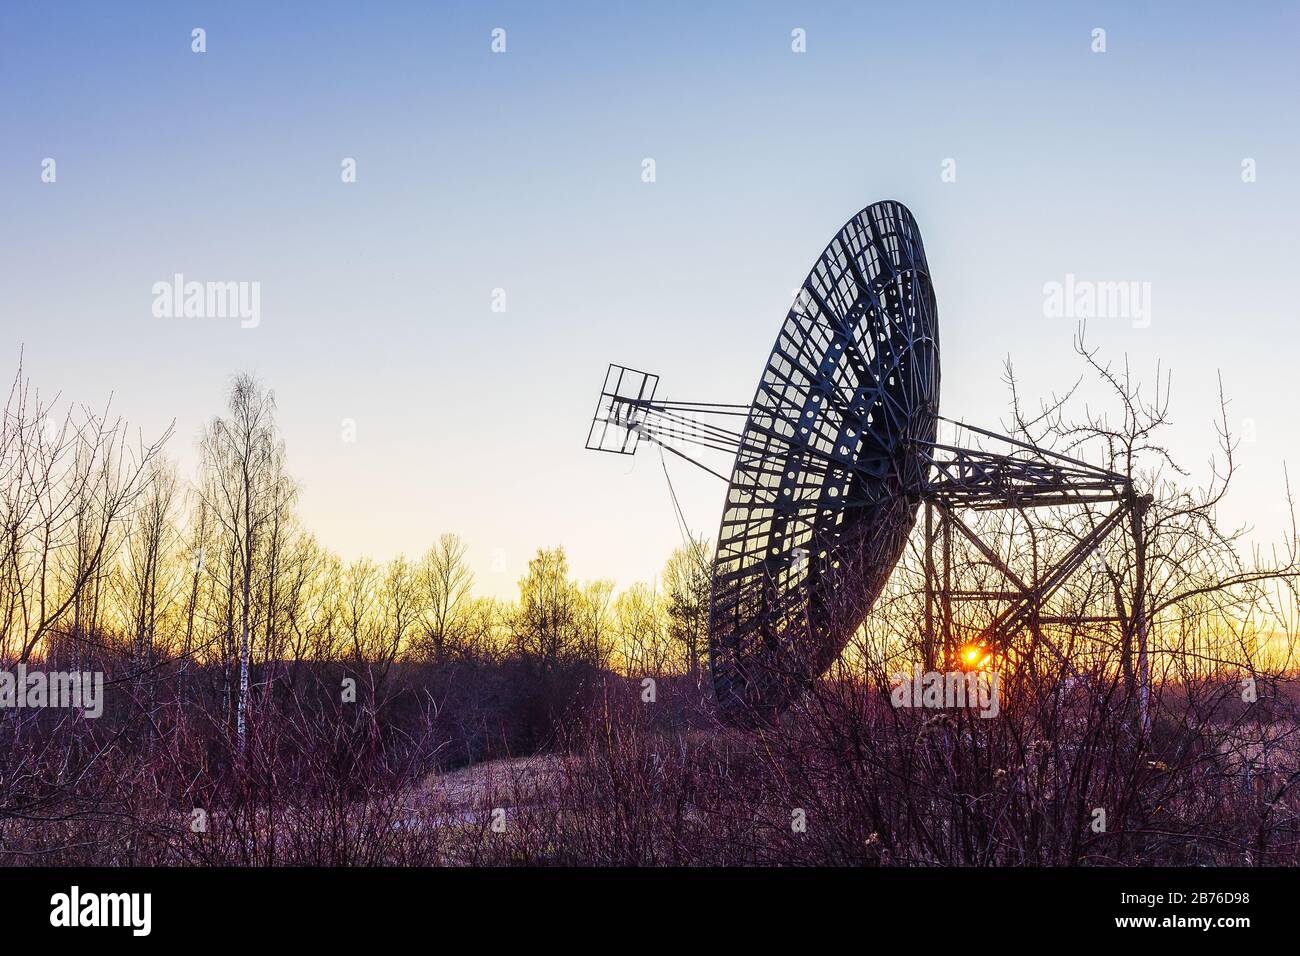 radio telescope dish satellite equipment at sunset landscape Stock Photo